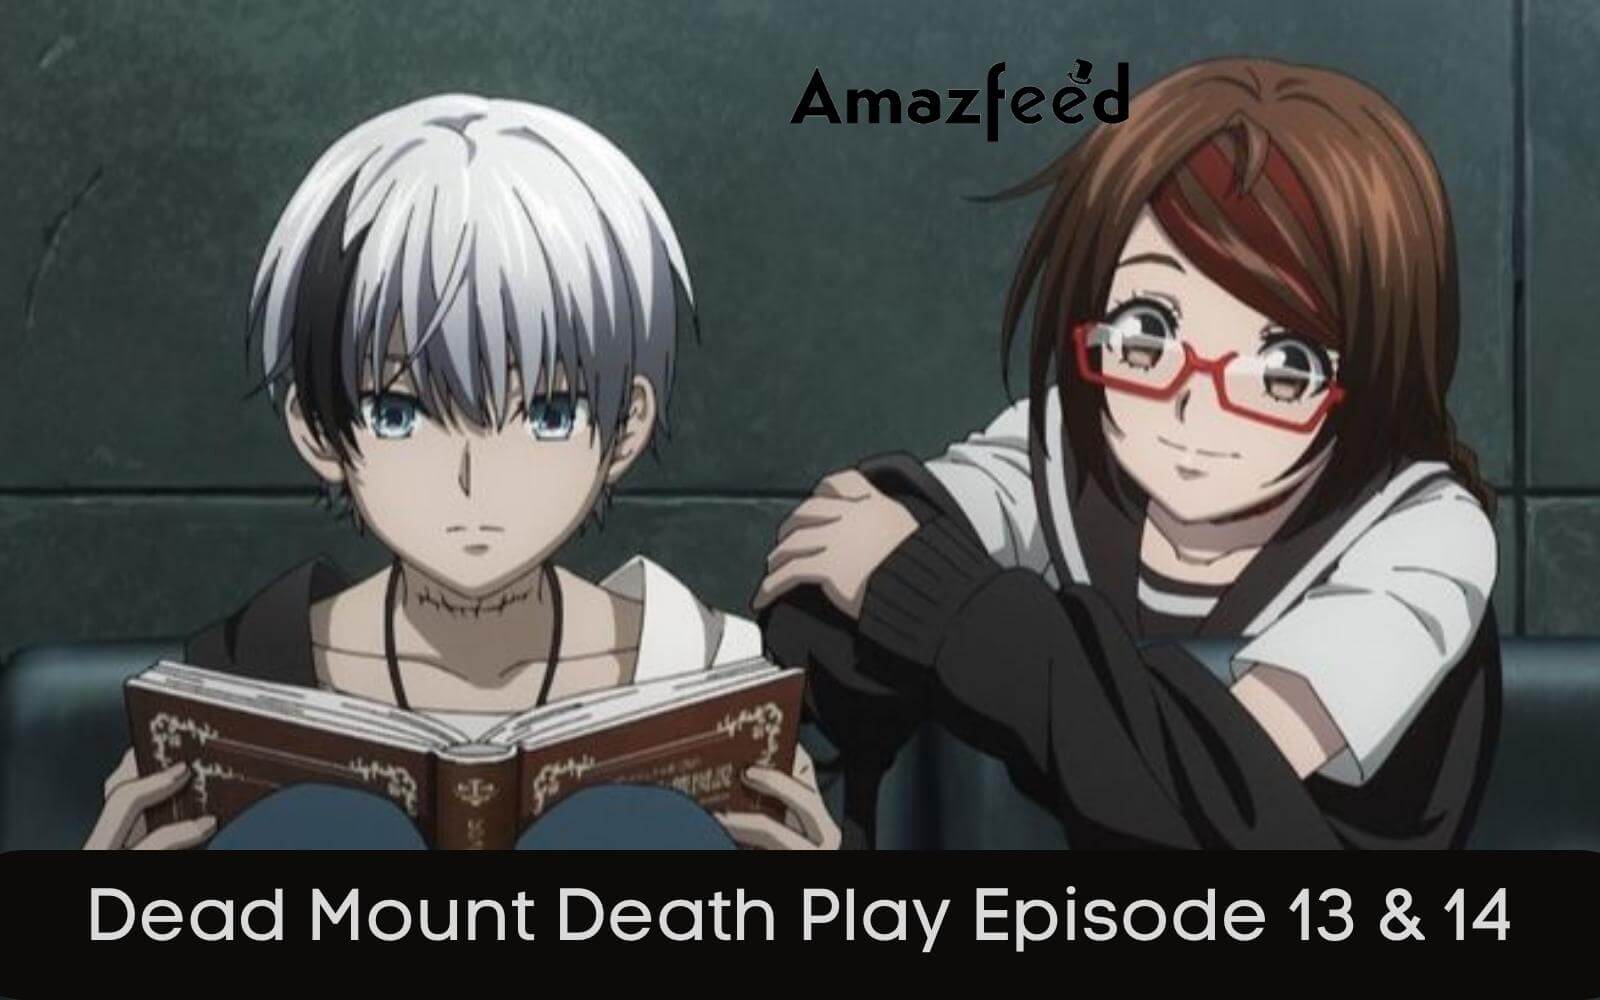 When Is Dead Mount Death Play Season 2 Coming? - IMDb